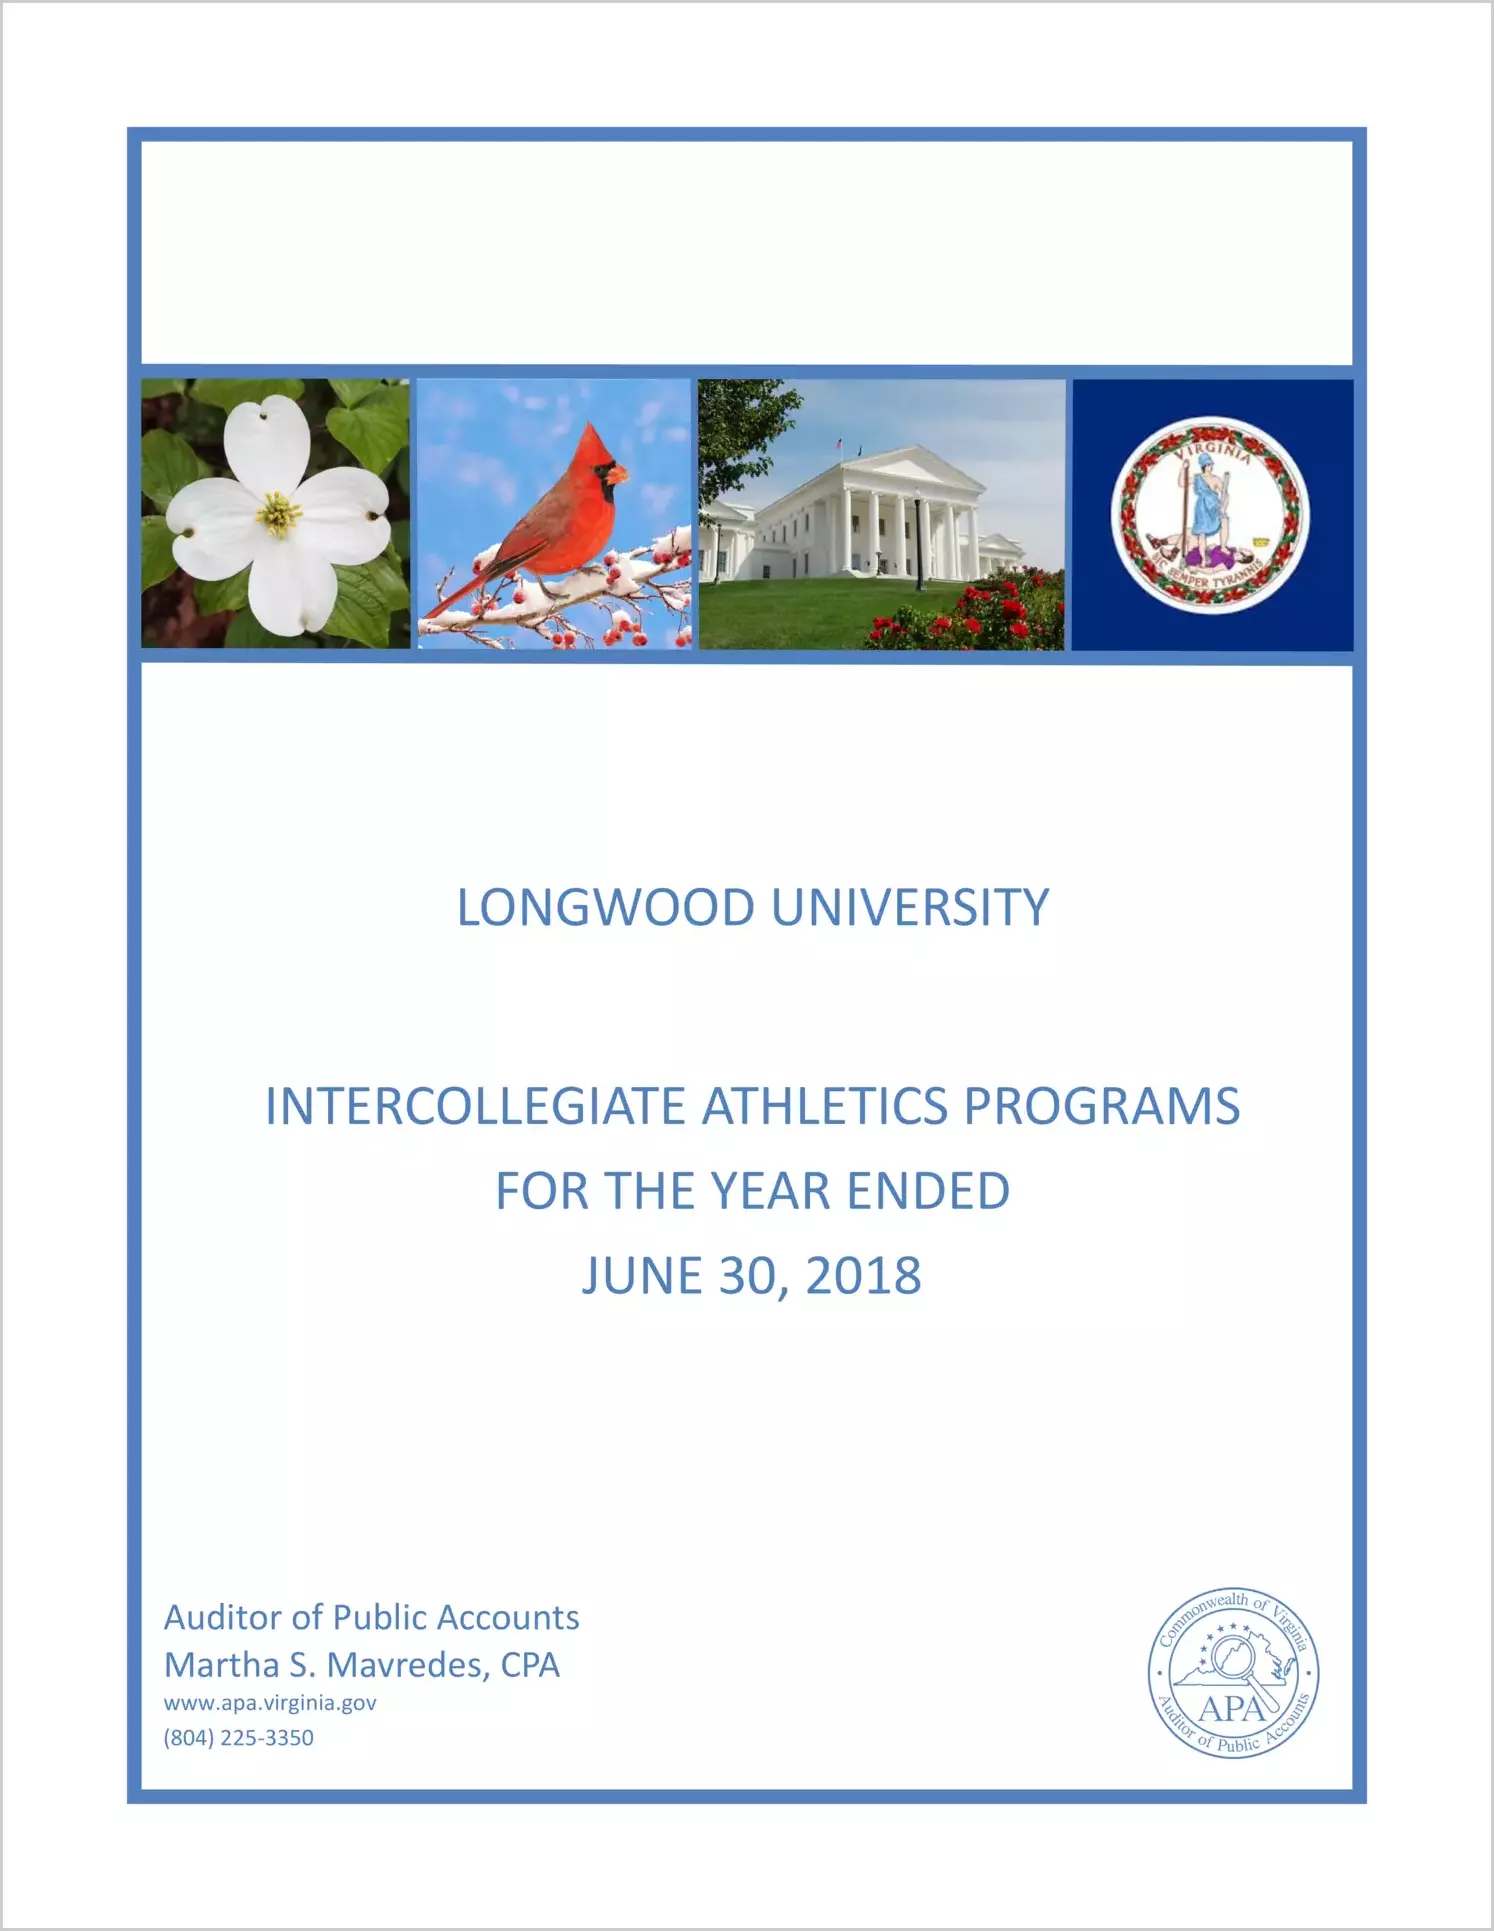 Longwood University Intercollegiate Athletics Programs for the year ended June 30, 2018